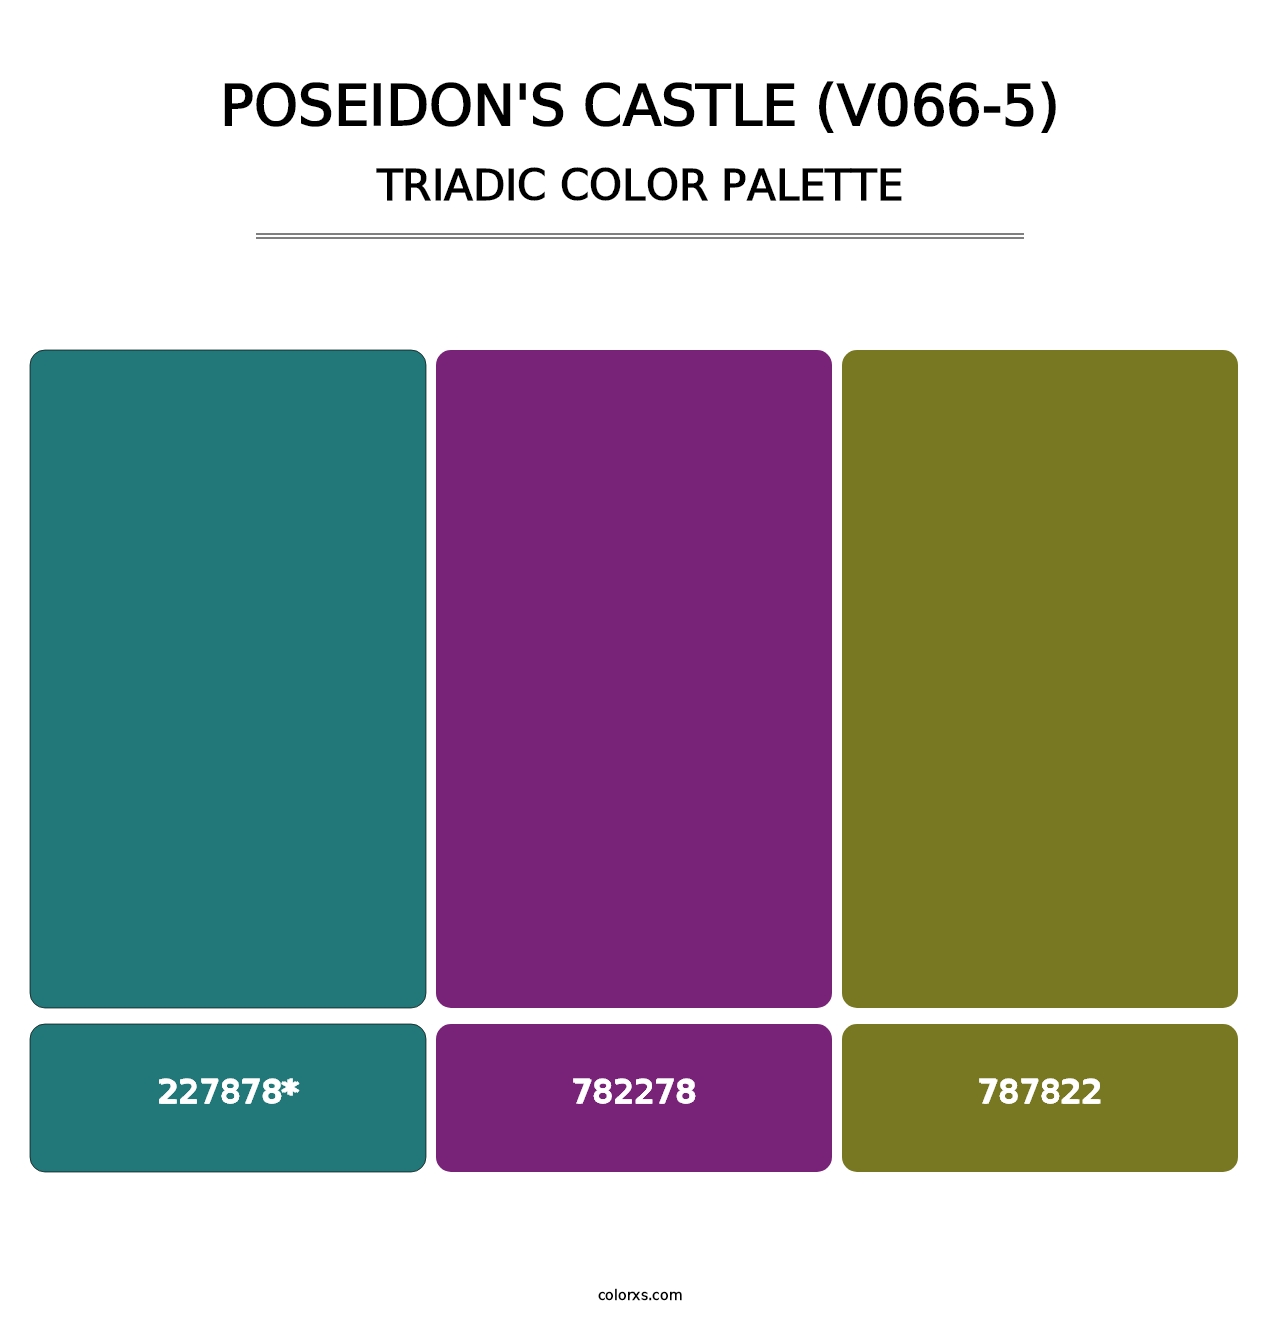 Poseidon's Castle (V066-5) - Triadic Color Palette